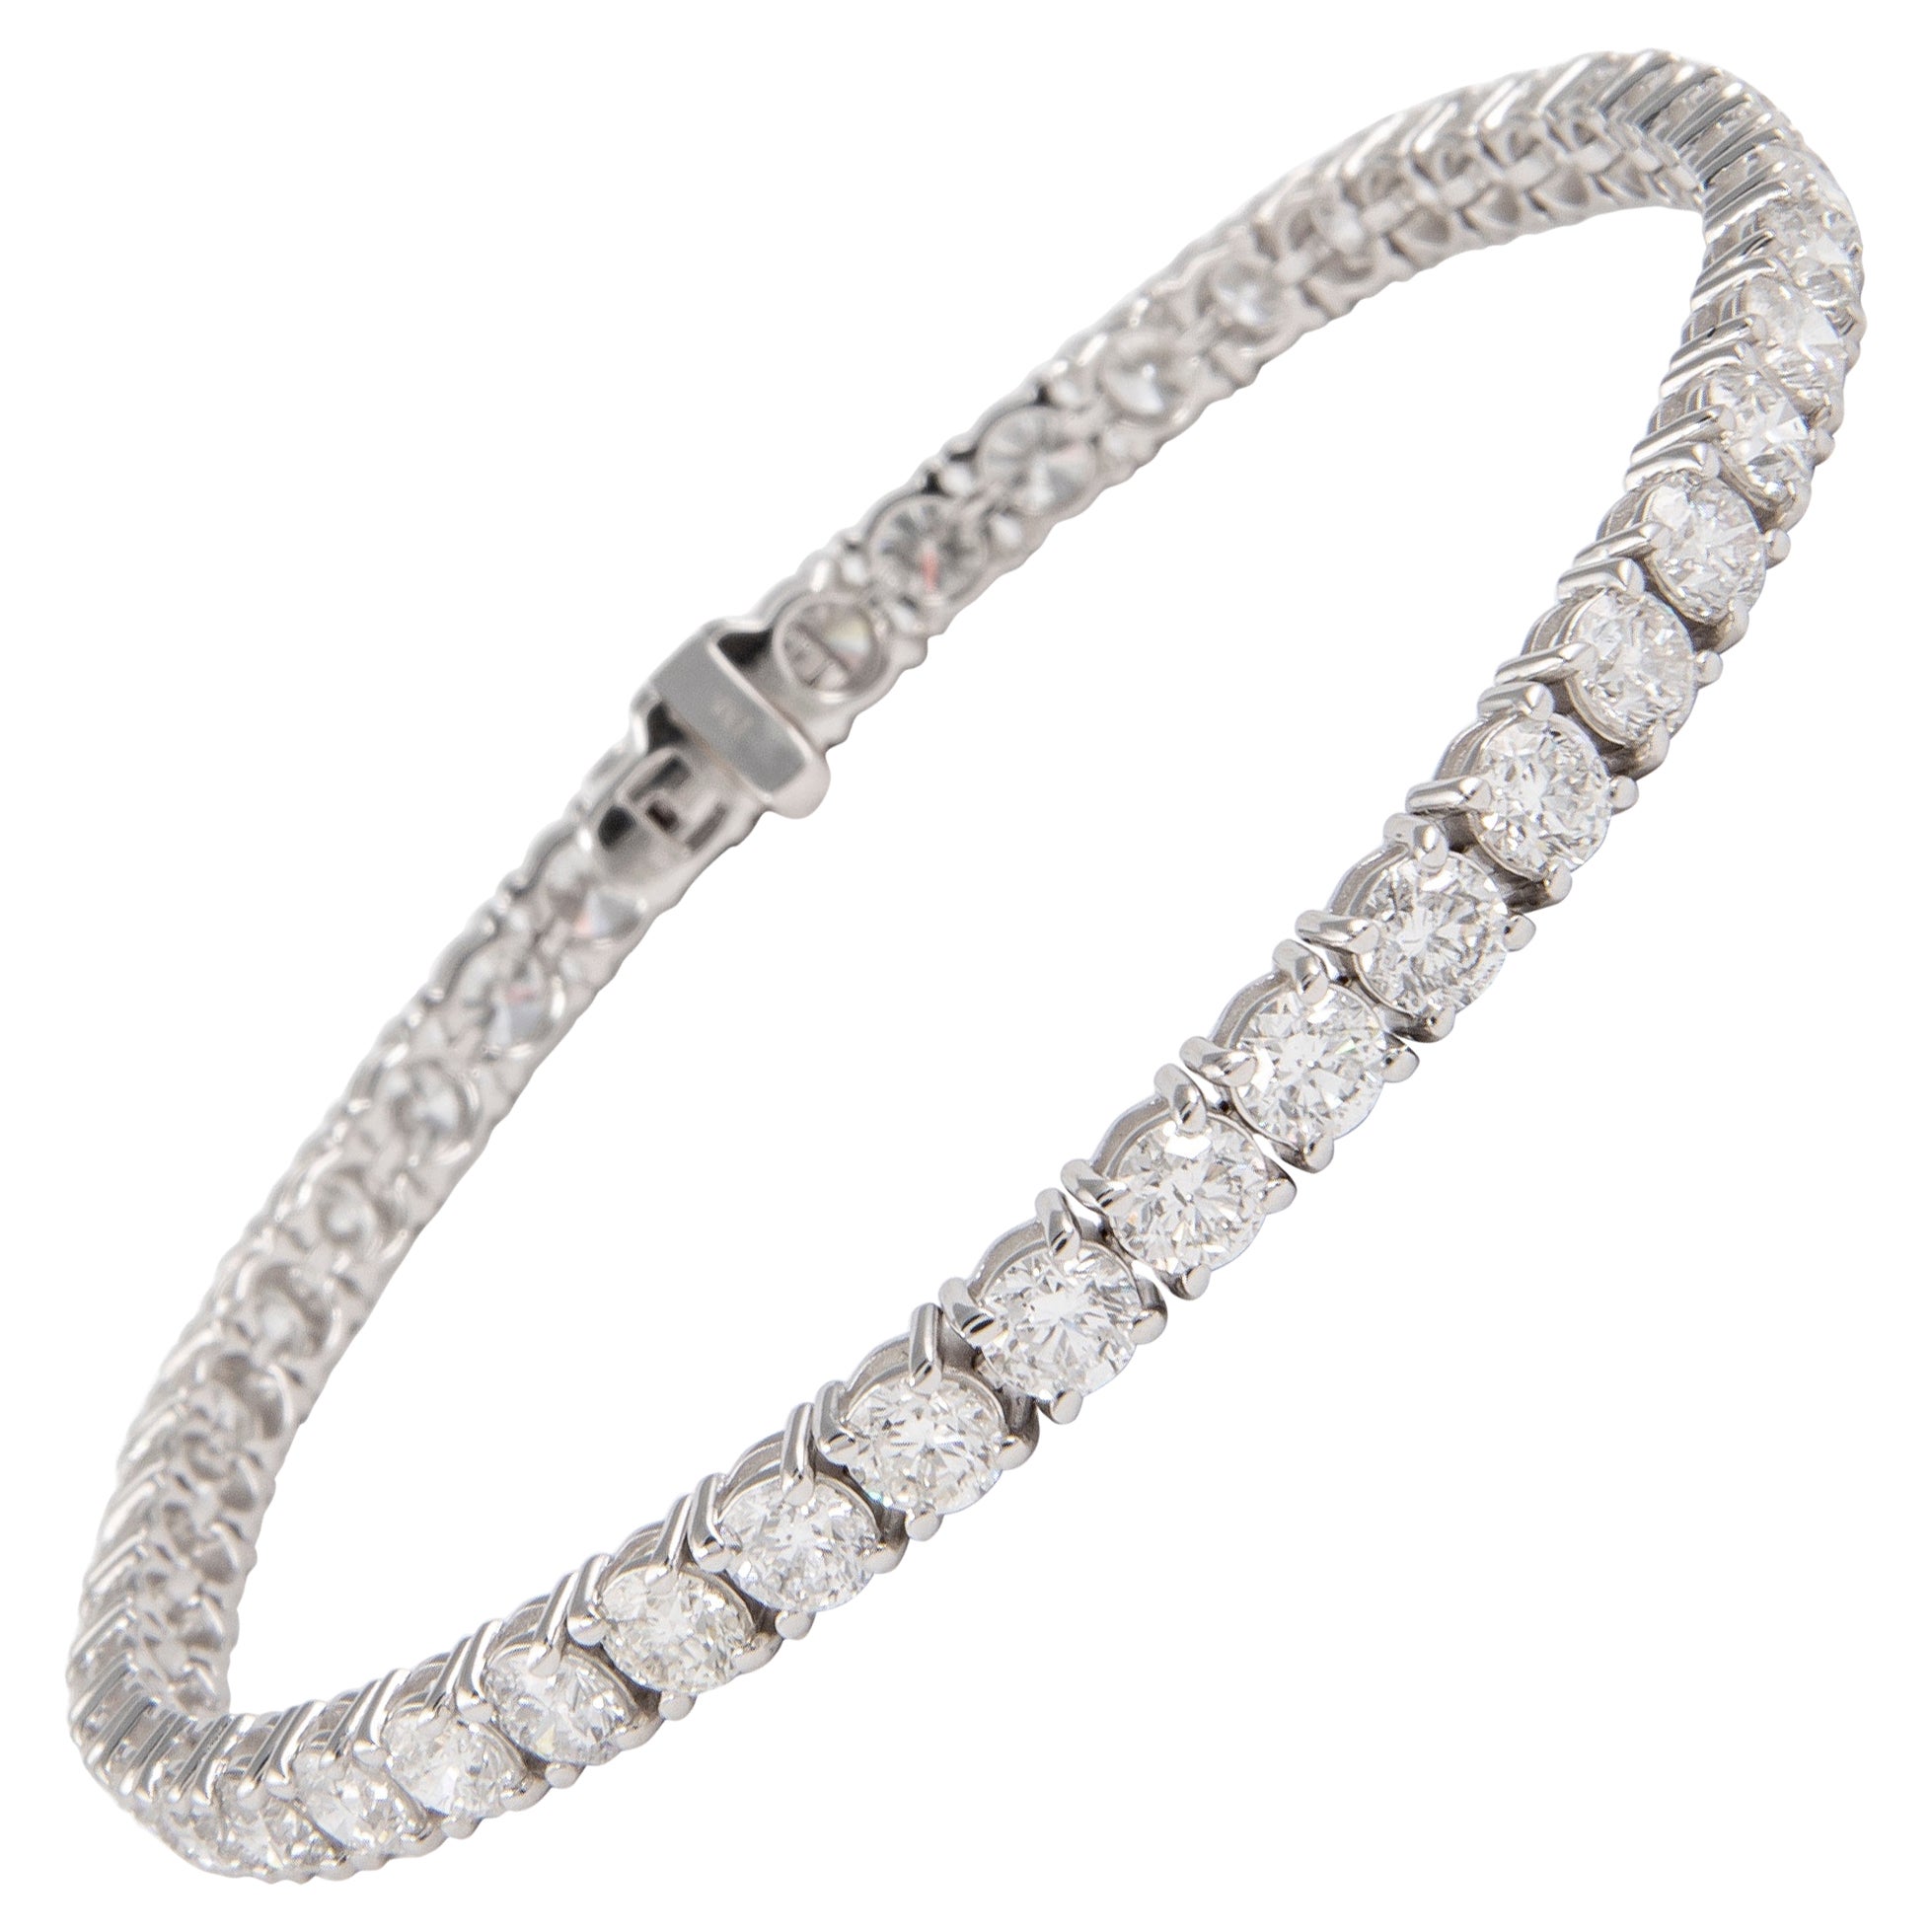 Alexander 8.33 Carats Diamond Tennis Bracelet 18-Karat White Gold